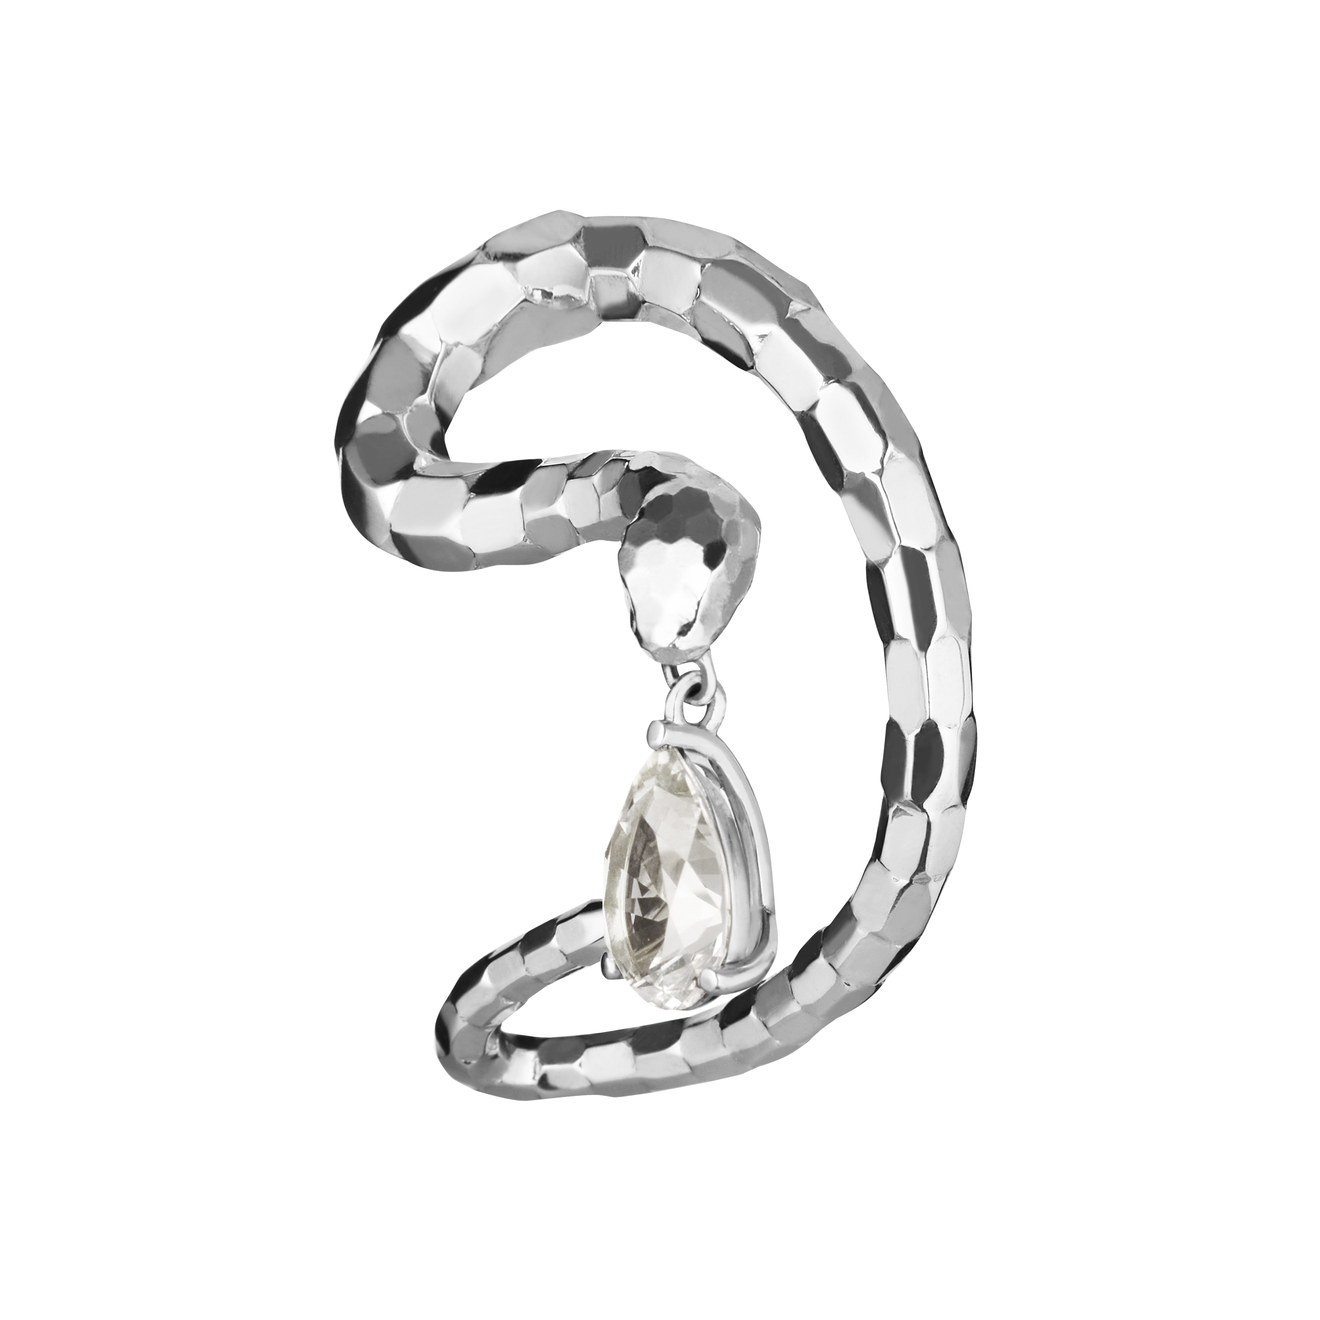 Vertigo Jewellery Lab Кафф-змея VENENUM из серебра vertigo jewellery lab позолоченный браслет змея venenum из серебра с топазом